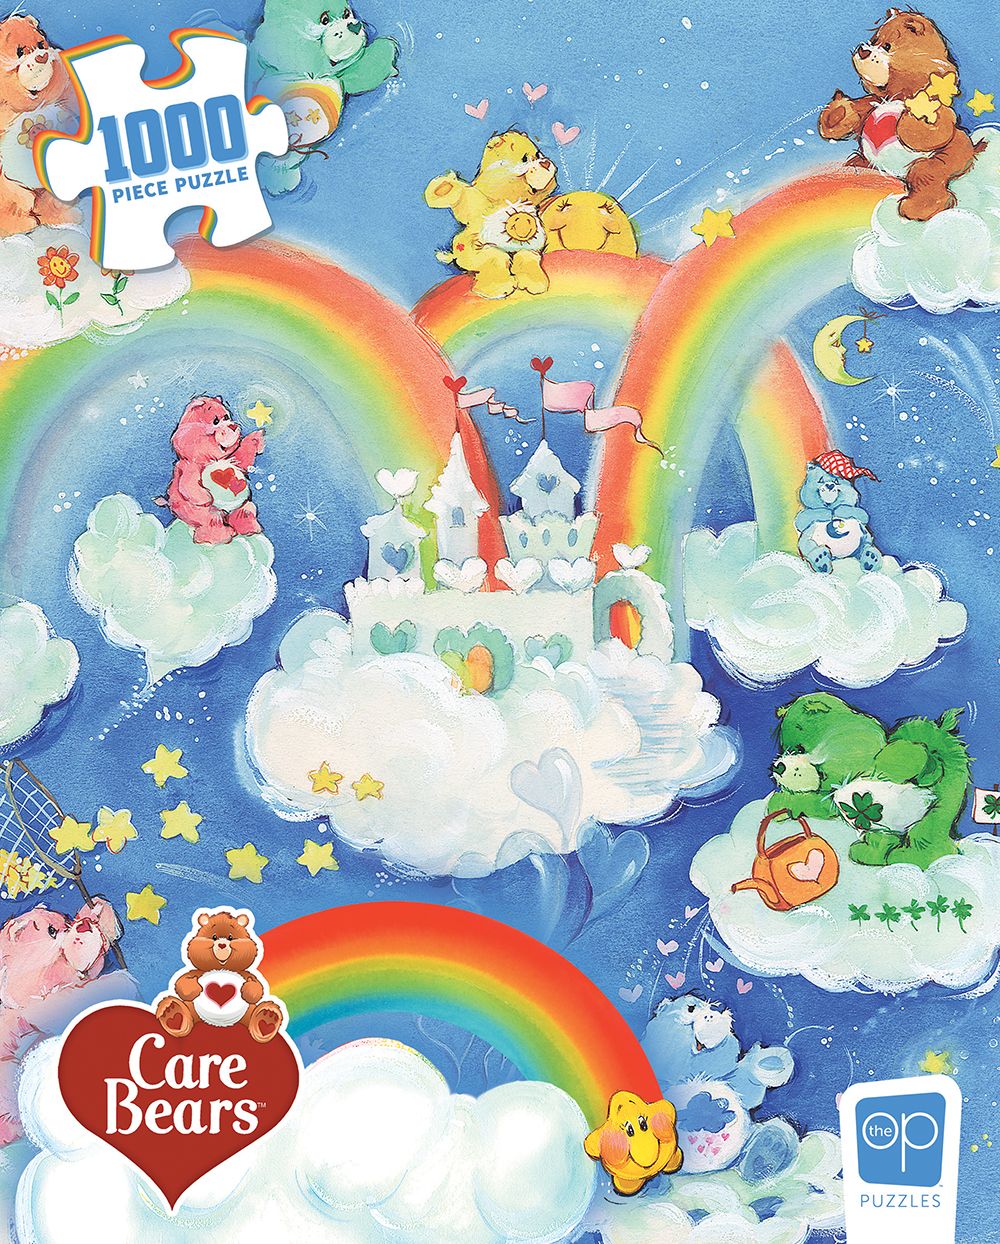 Care Bears "Care-A-Lot"